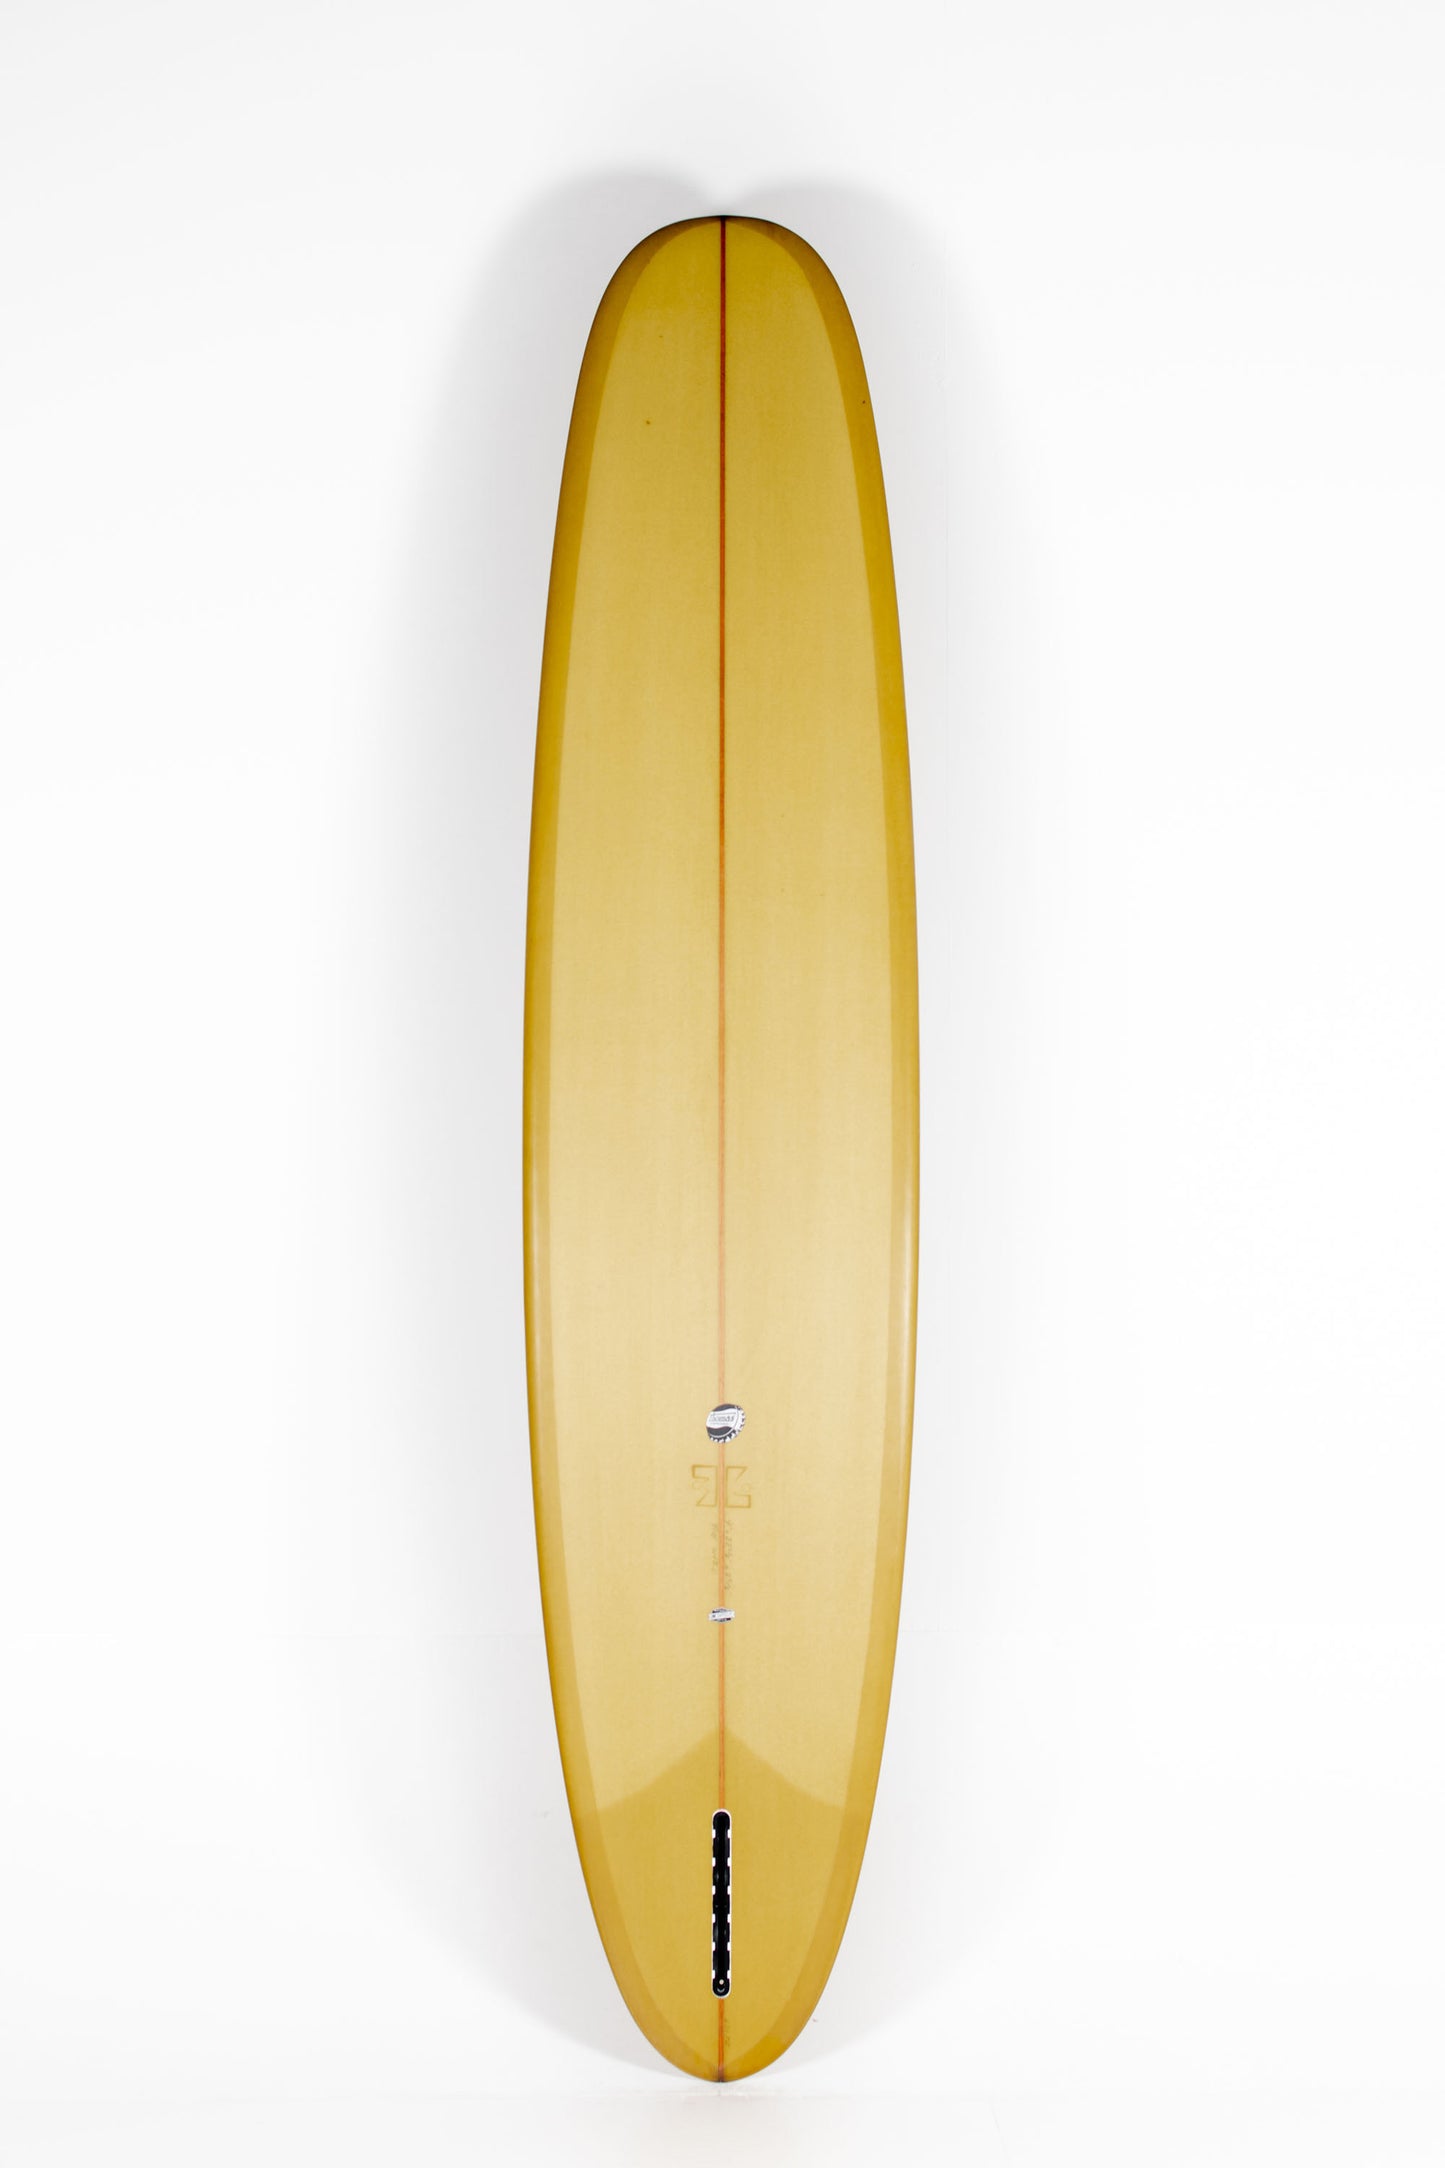 Pukas Surf Shop - Thomas Surfboards - WIZL - 9'0"x22 3/8 x 2 5/8 - Ref. WIZL90